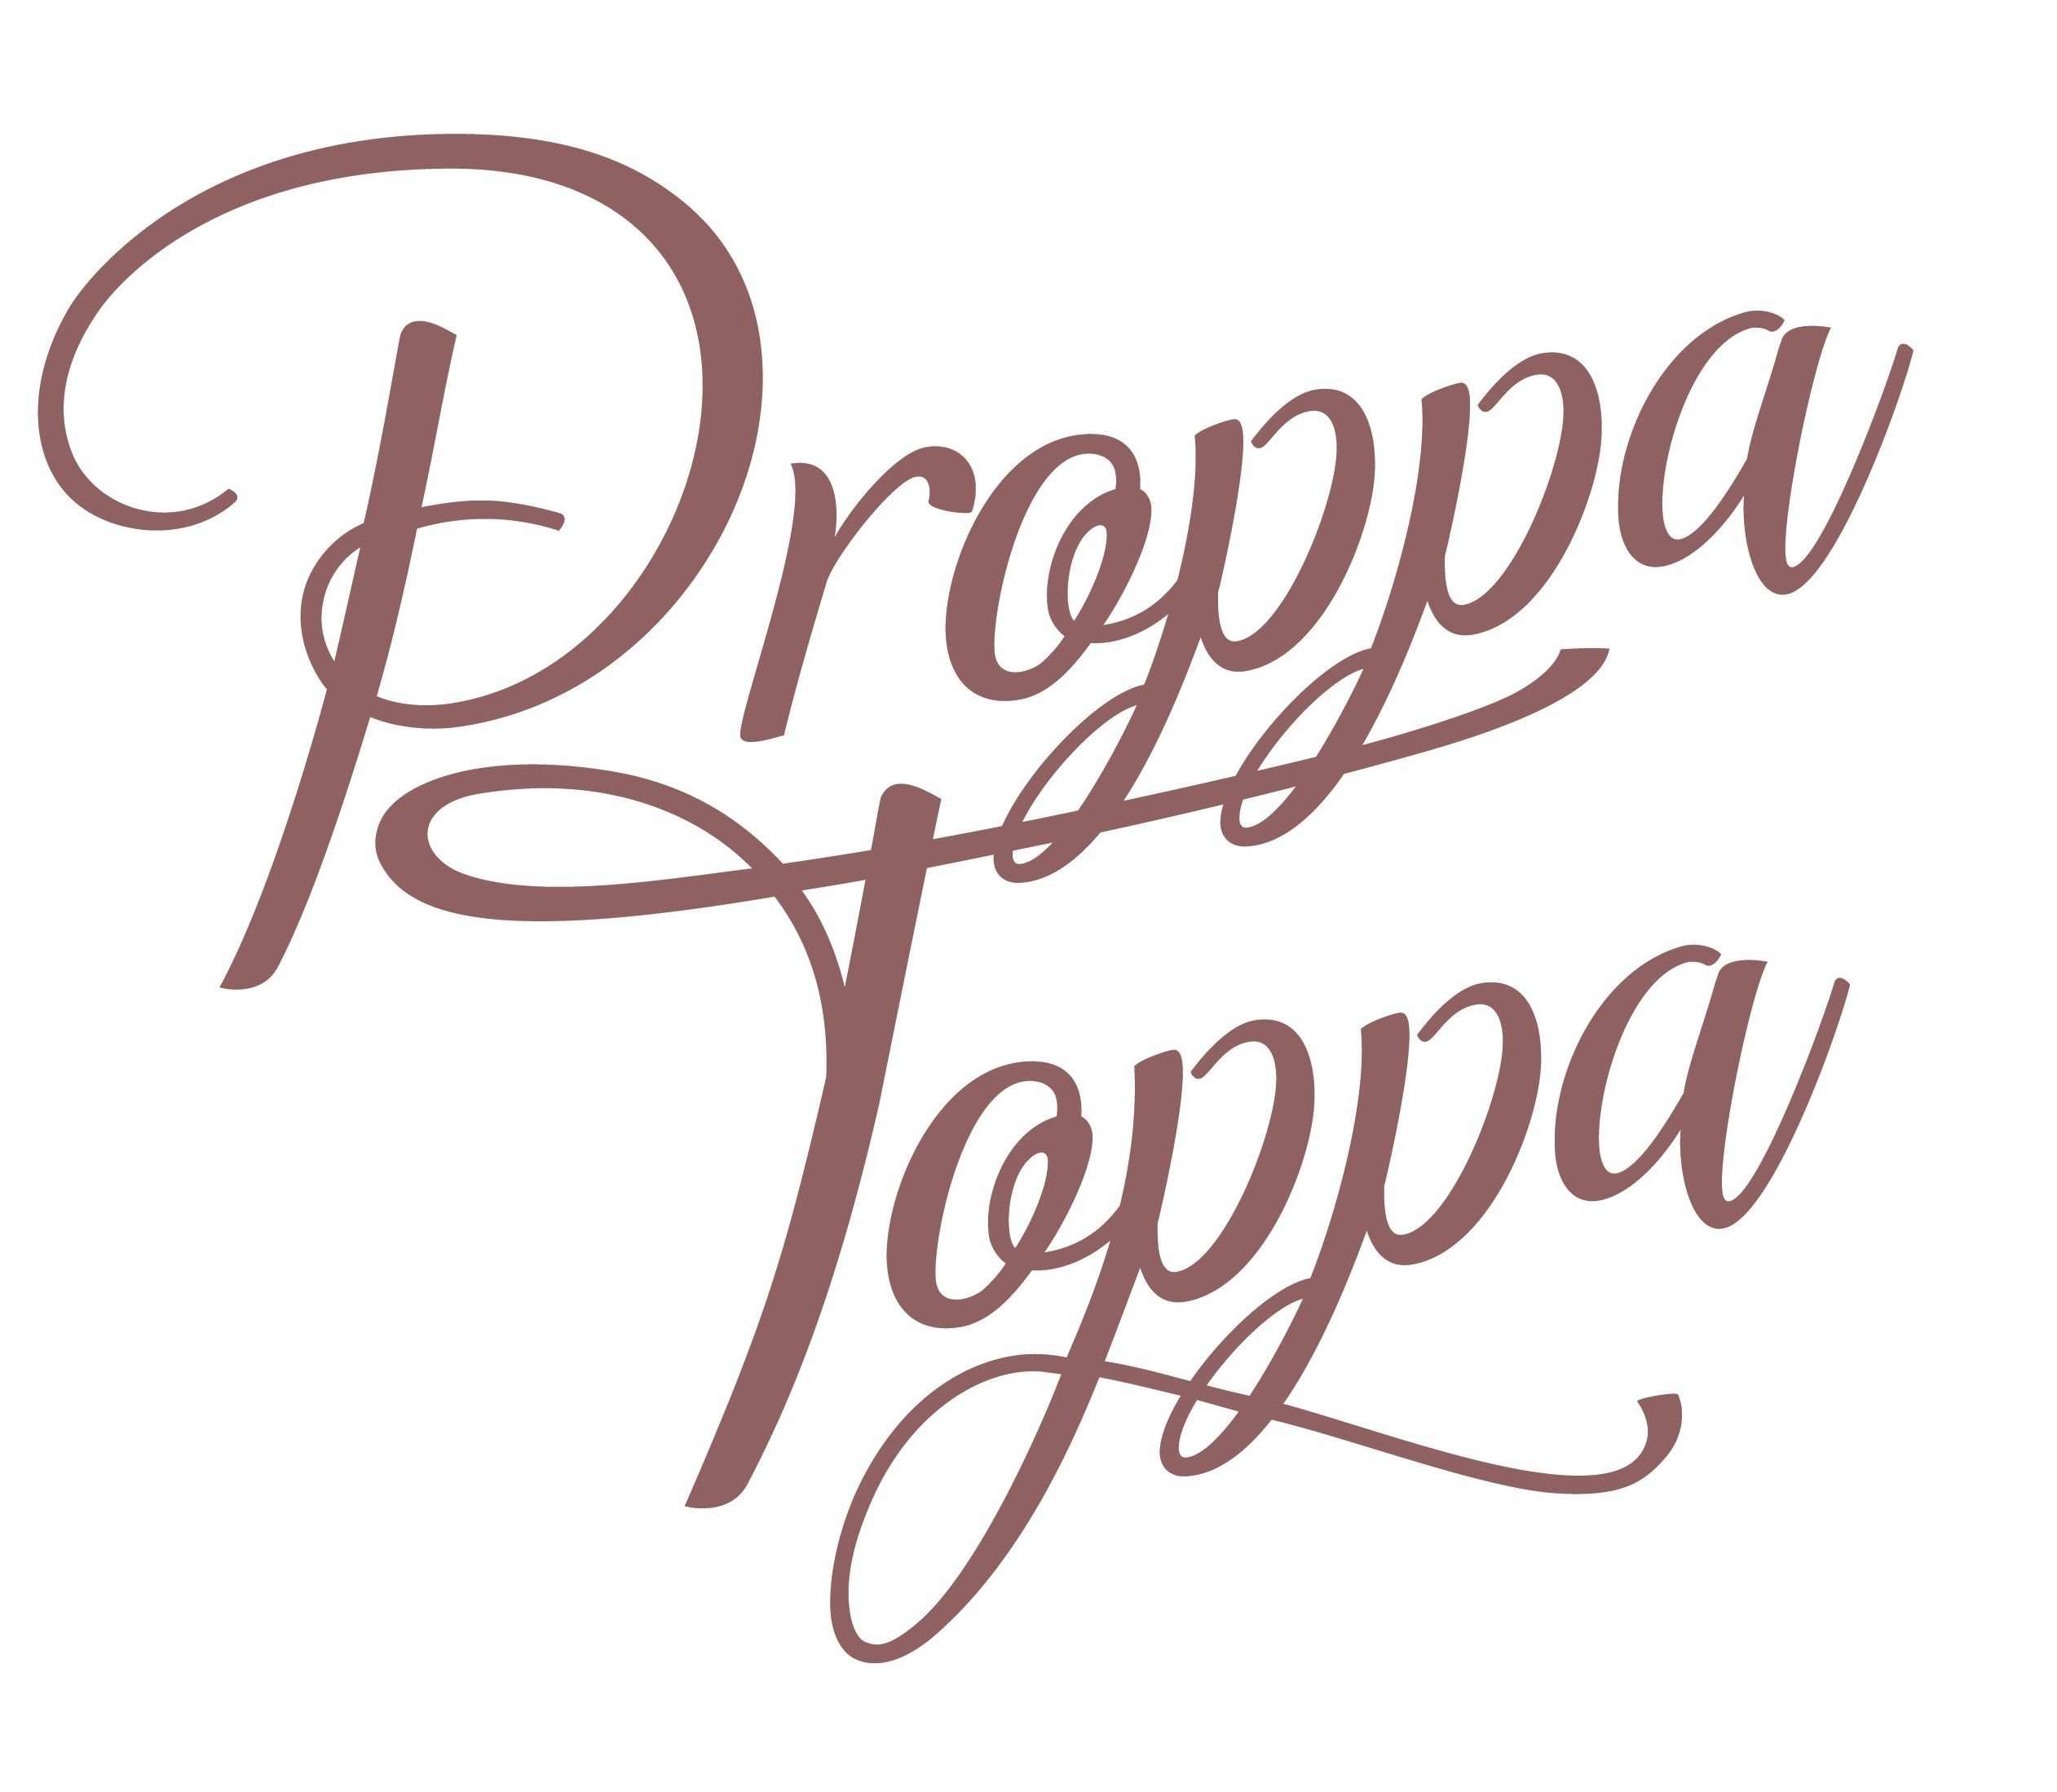 Proppa Toppa